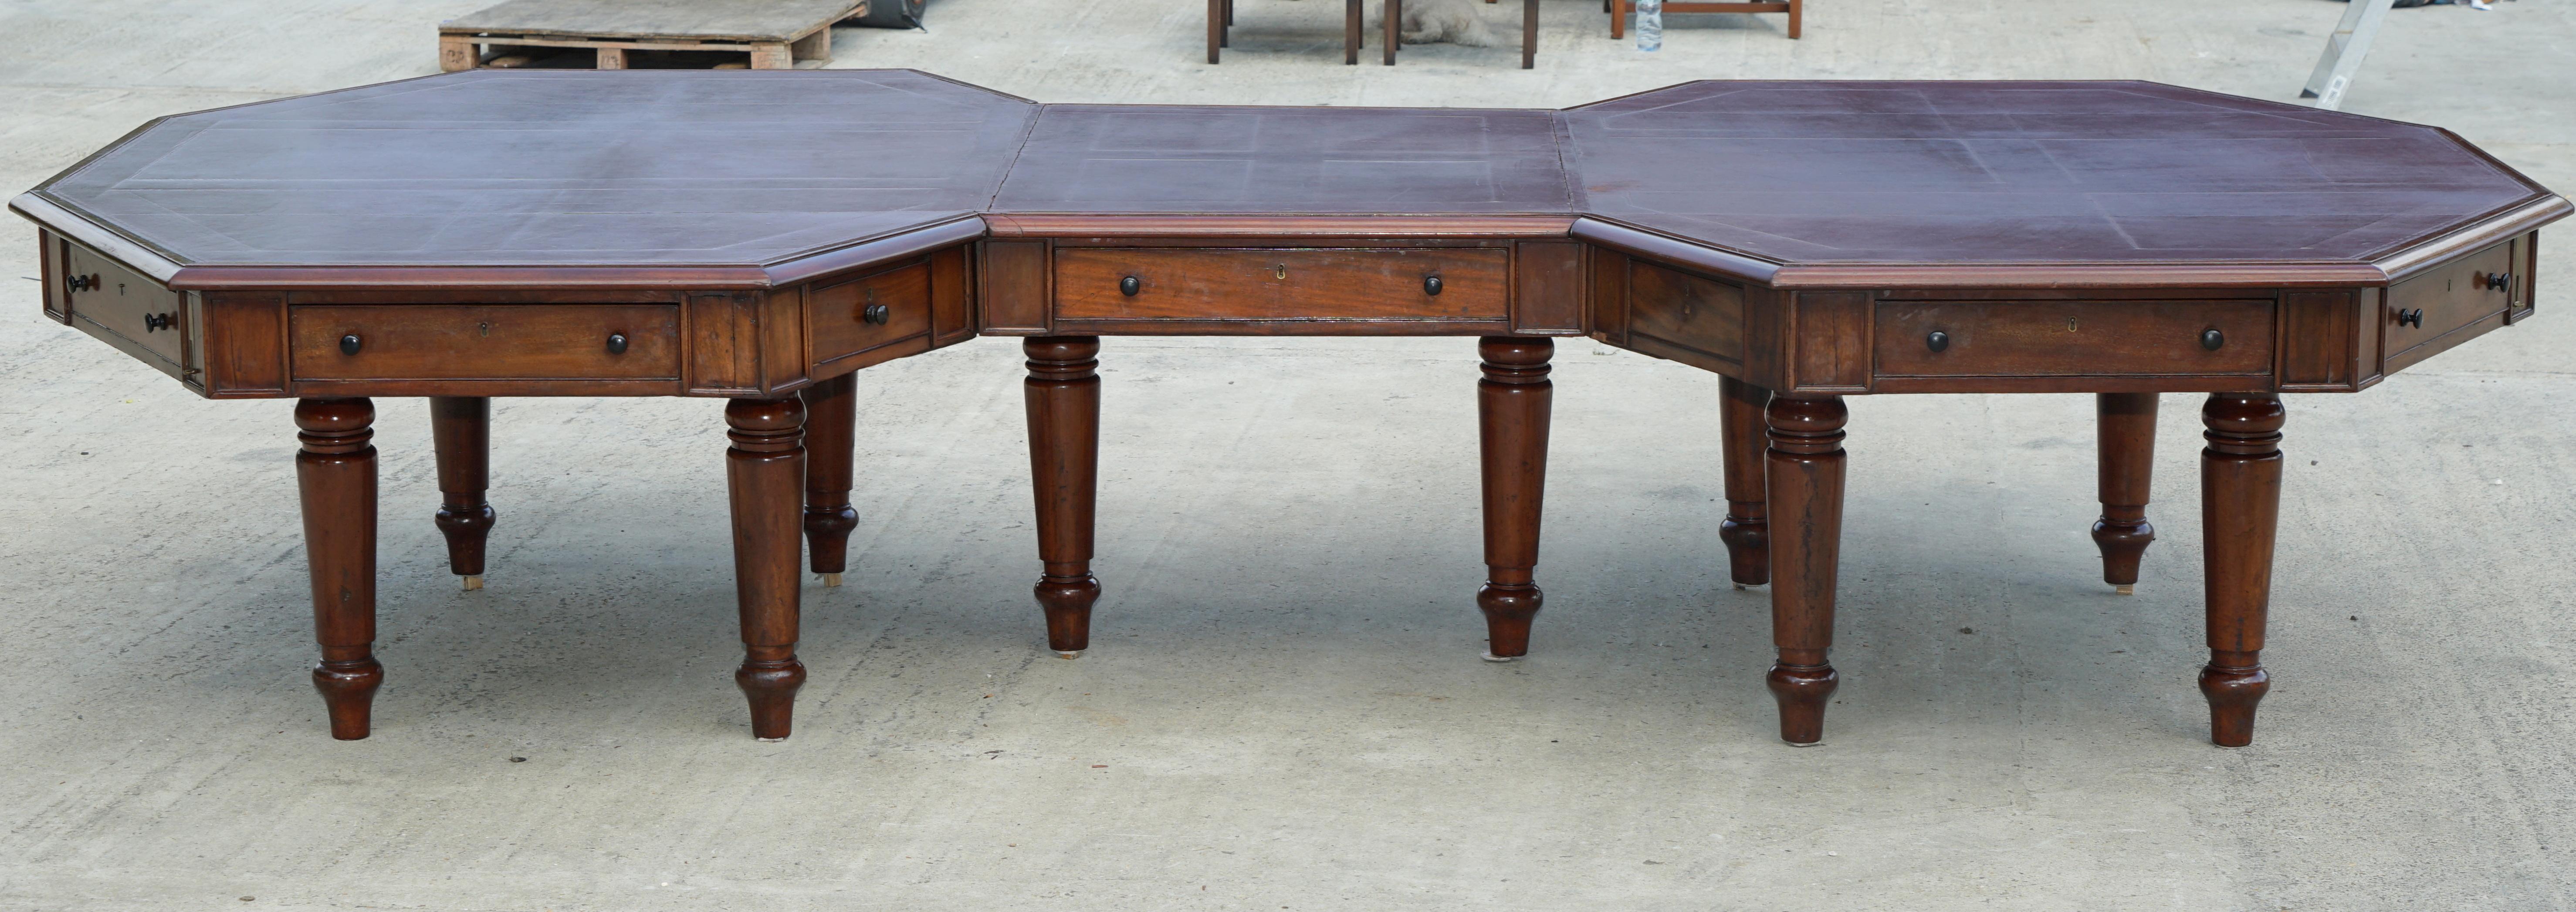 Massive Antique George III 1780 Hardwood Library Desk Table George Rex Locks For Sale 8